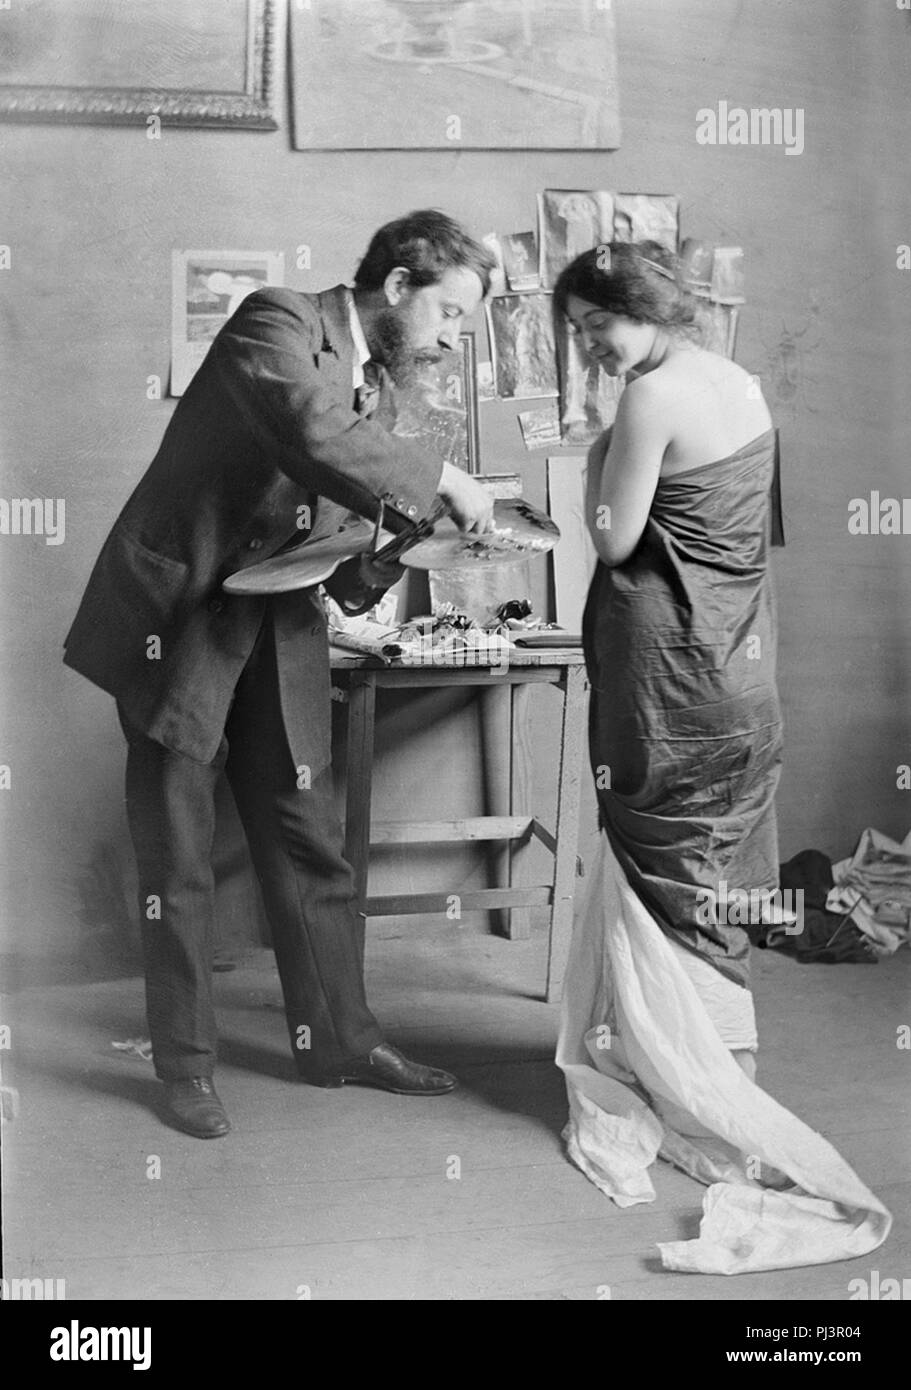 Baldomer Gili Roig. Baldomer Gili Roig amb una Modell al Seu estudi (Roma), 1900 - 1904. Stockfoto